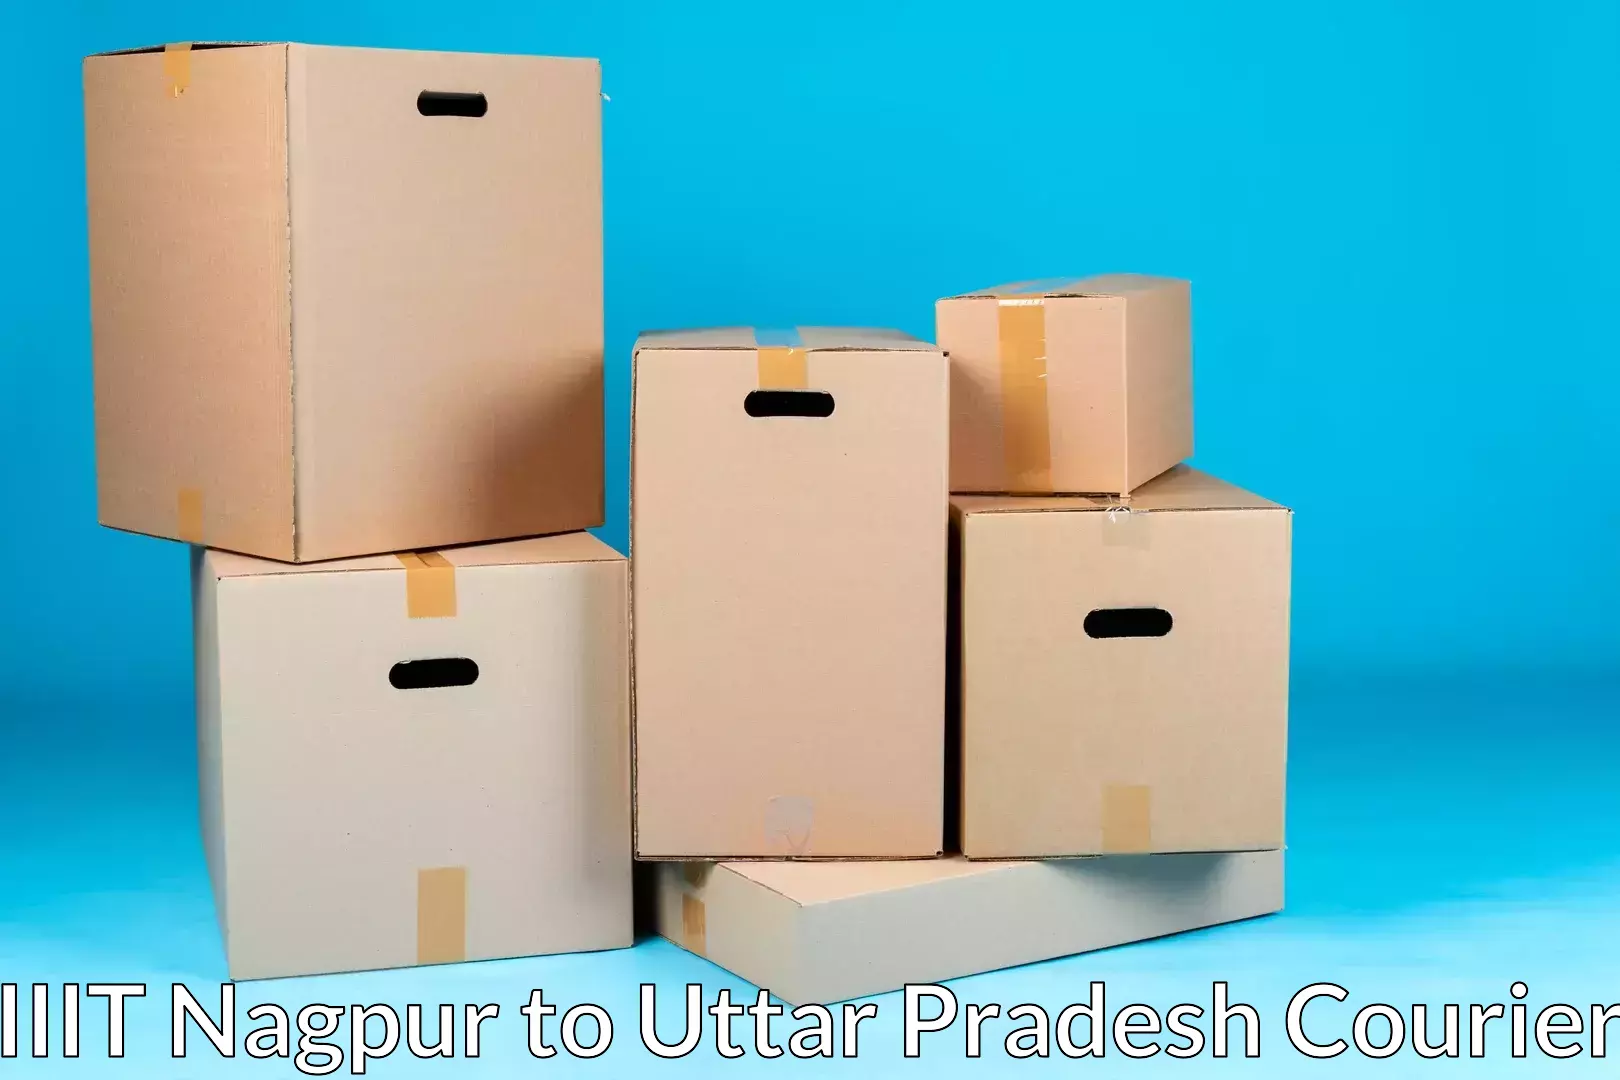 Budget-friendly movers IIIT Nagpur to Uttar Pradesh